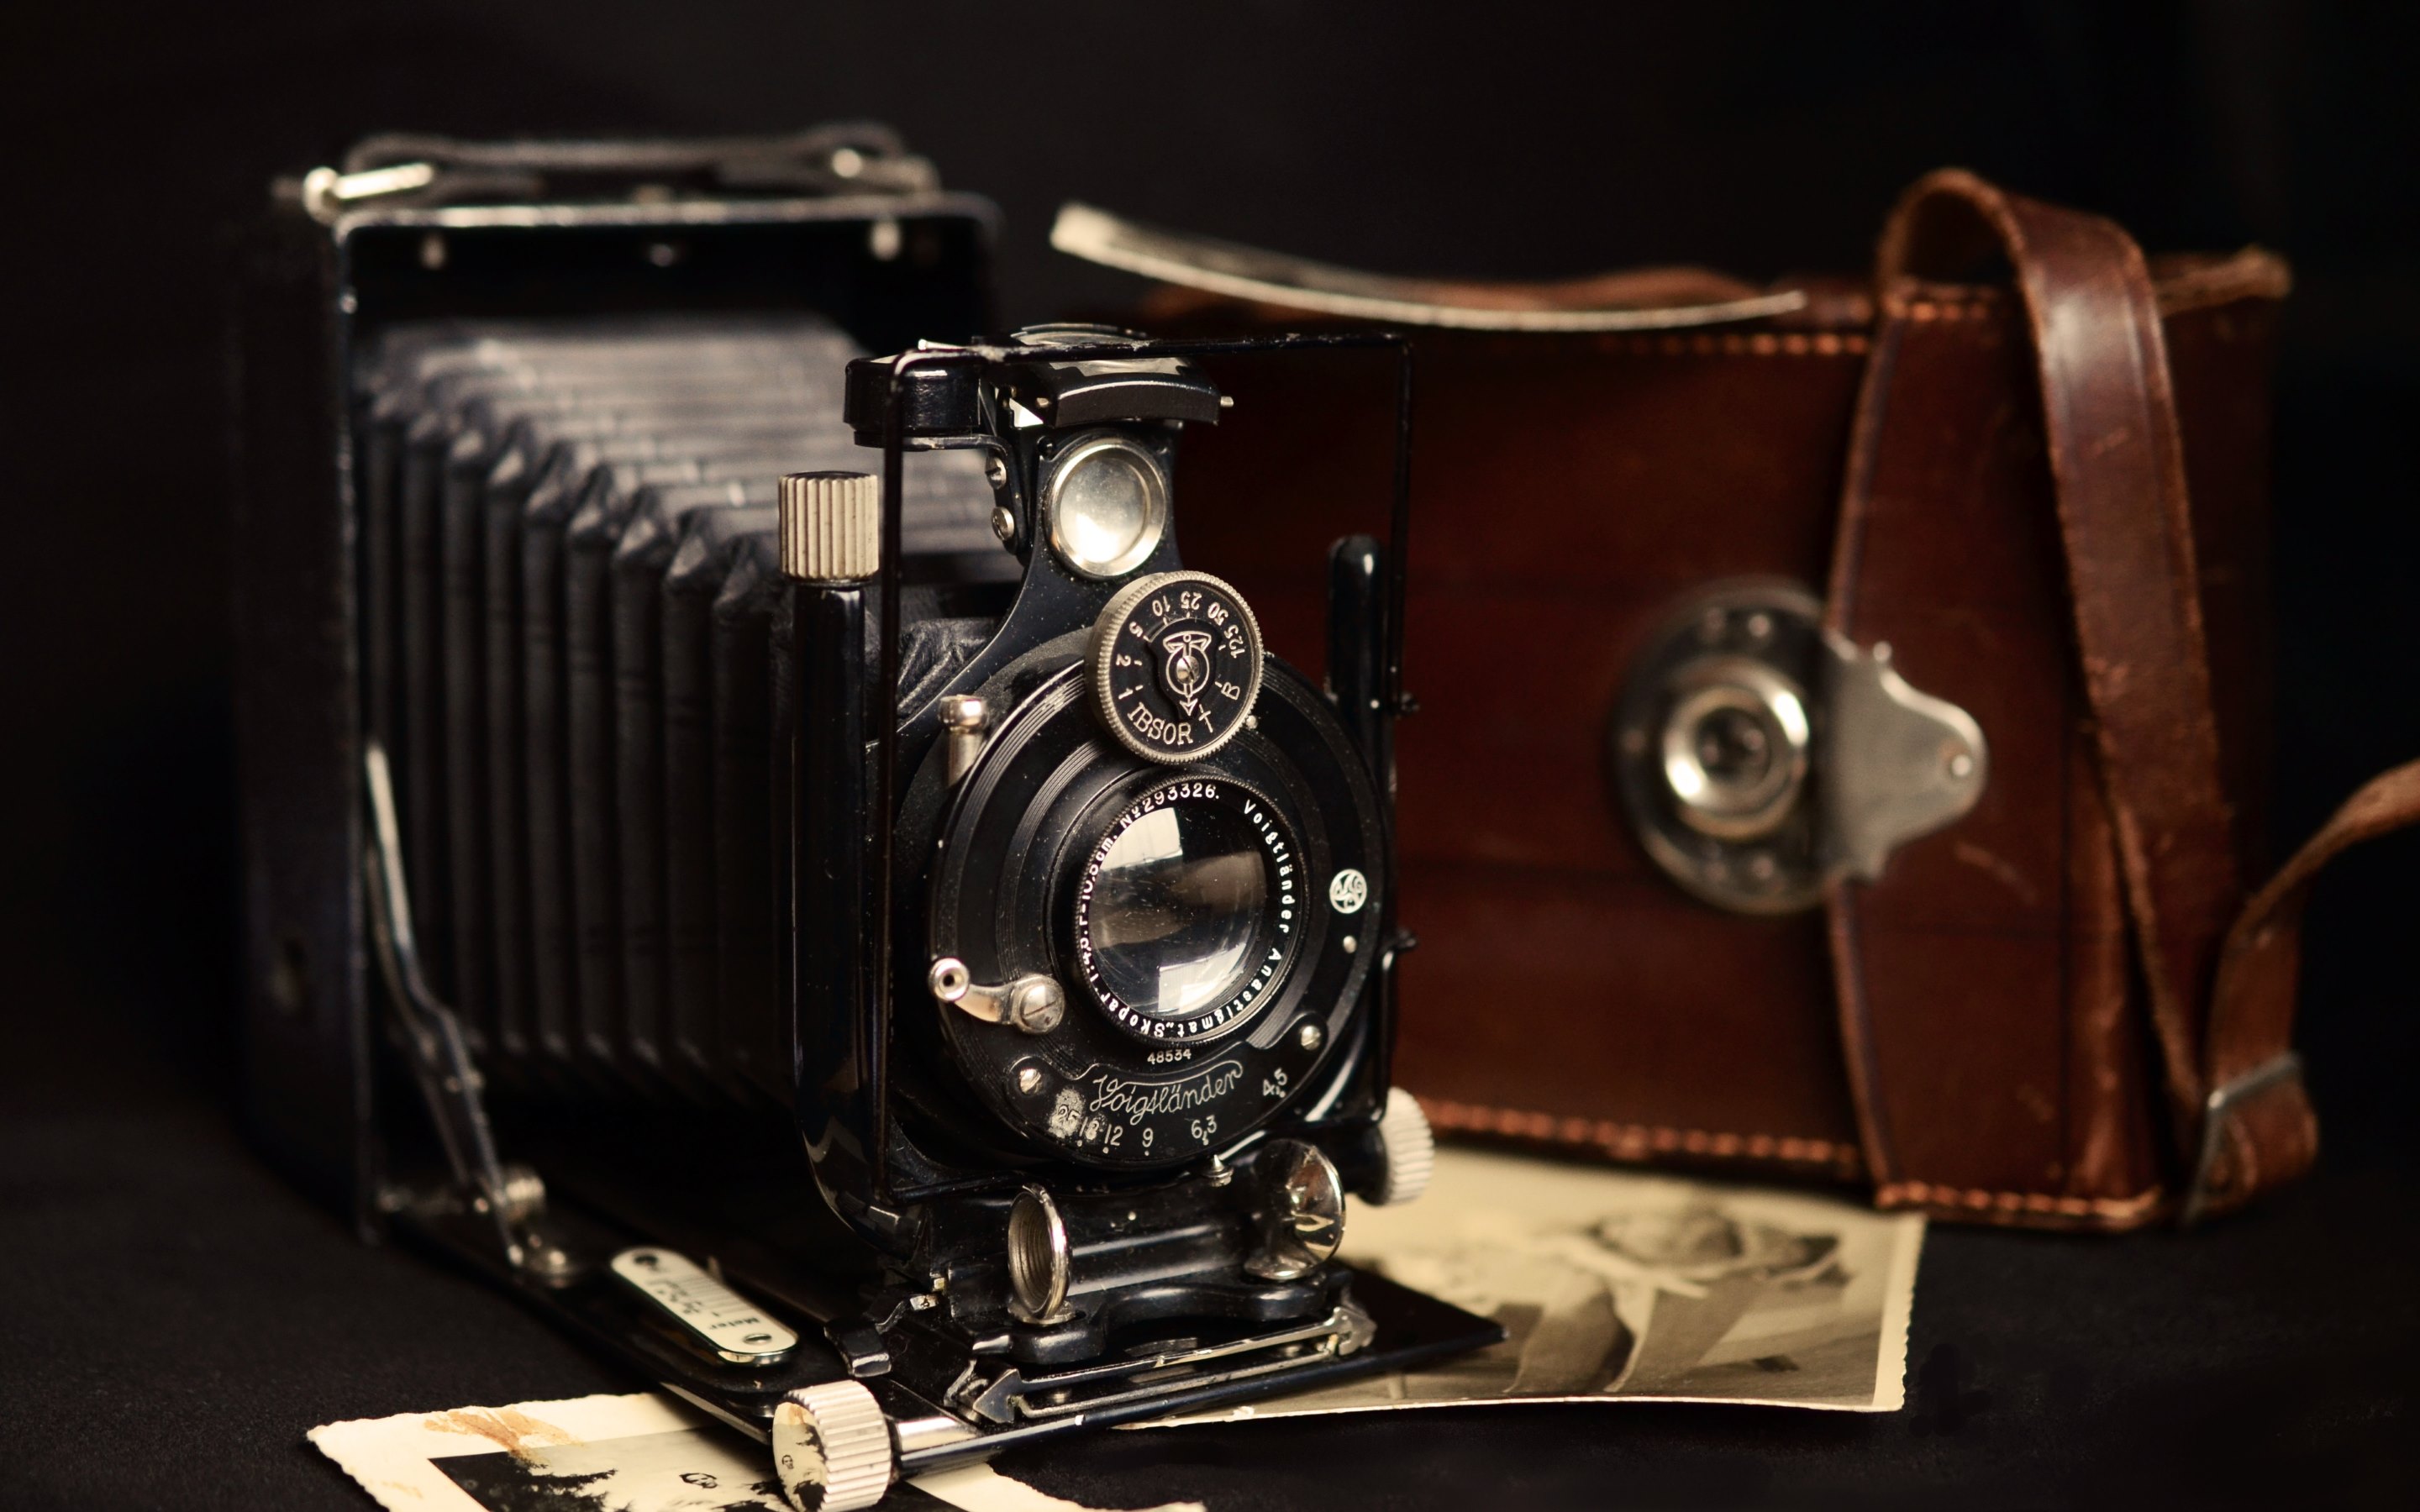 Vintage Camera Equipment